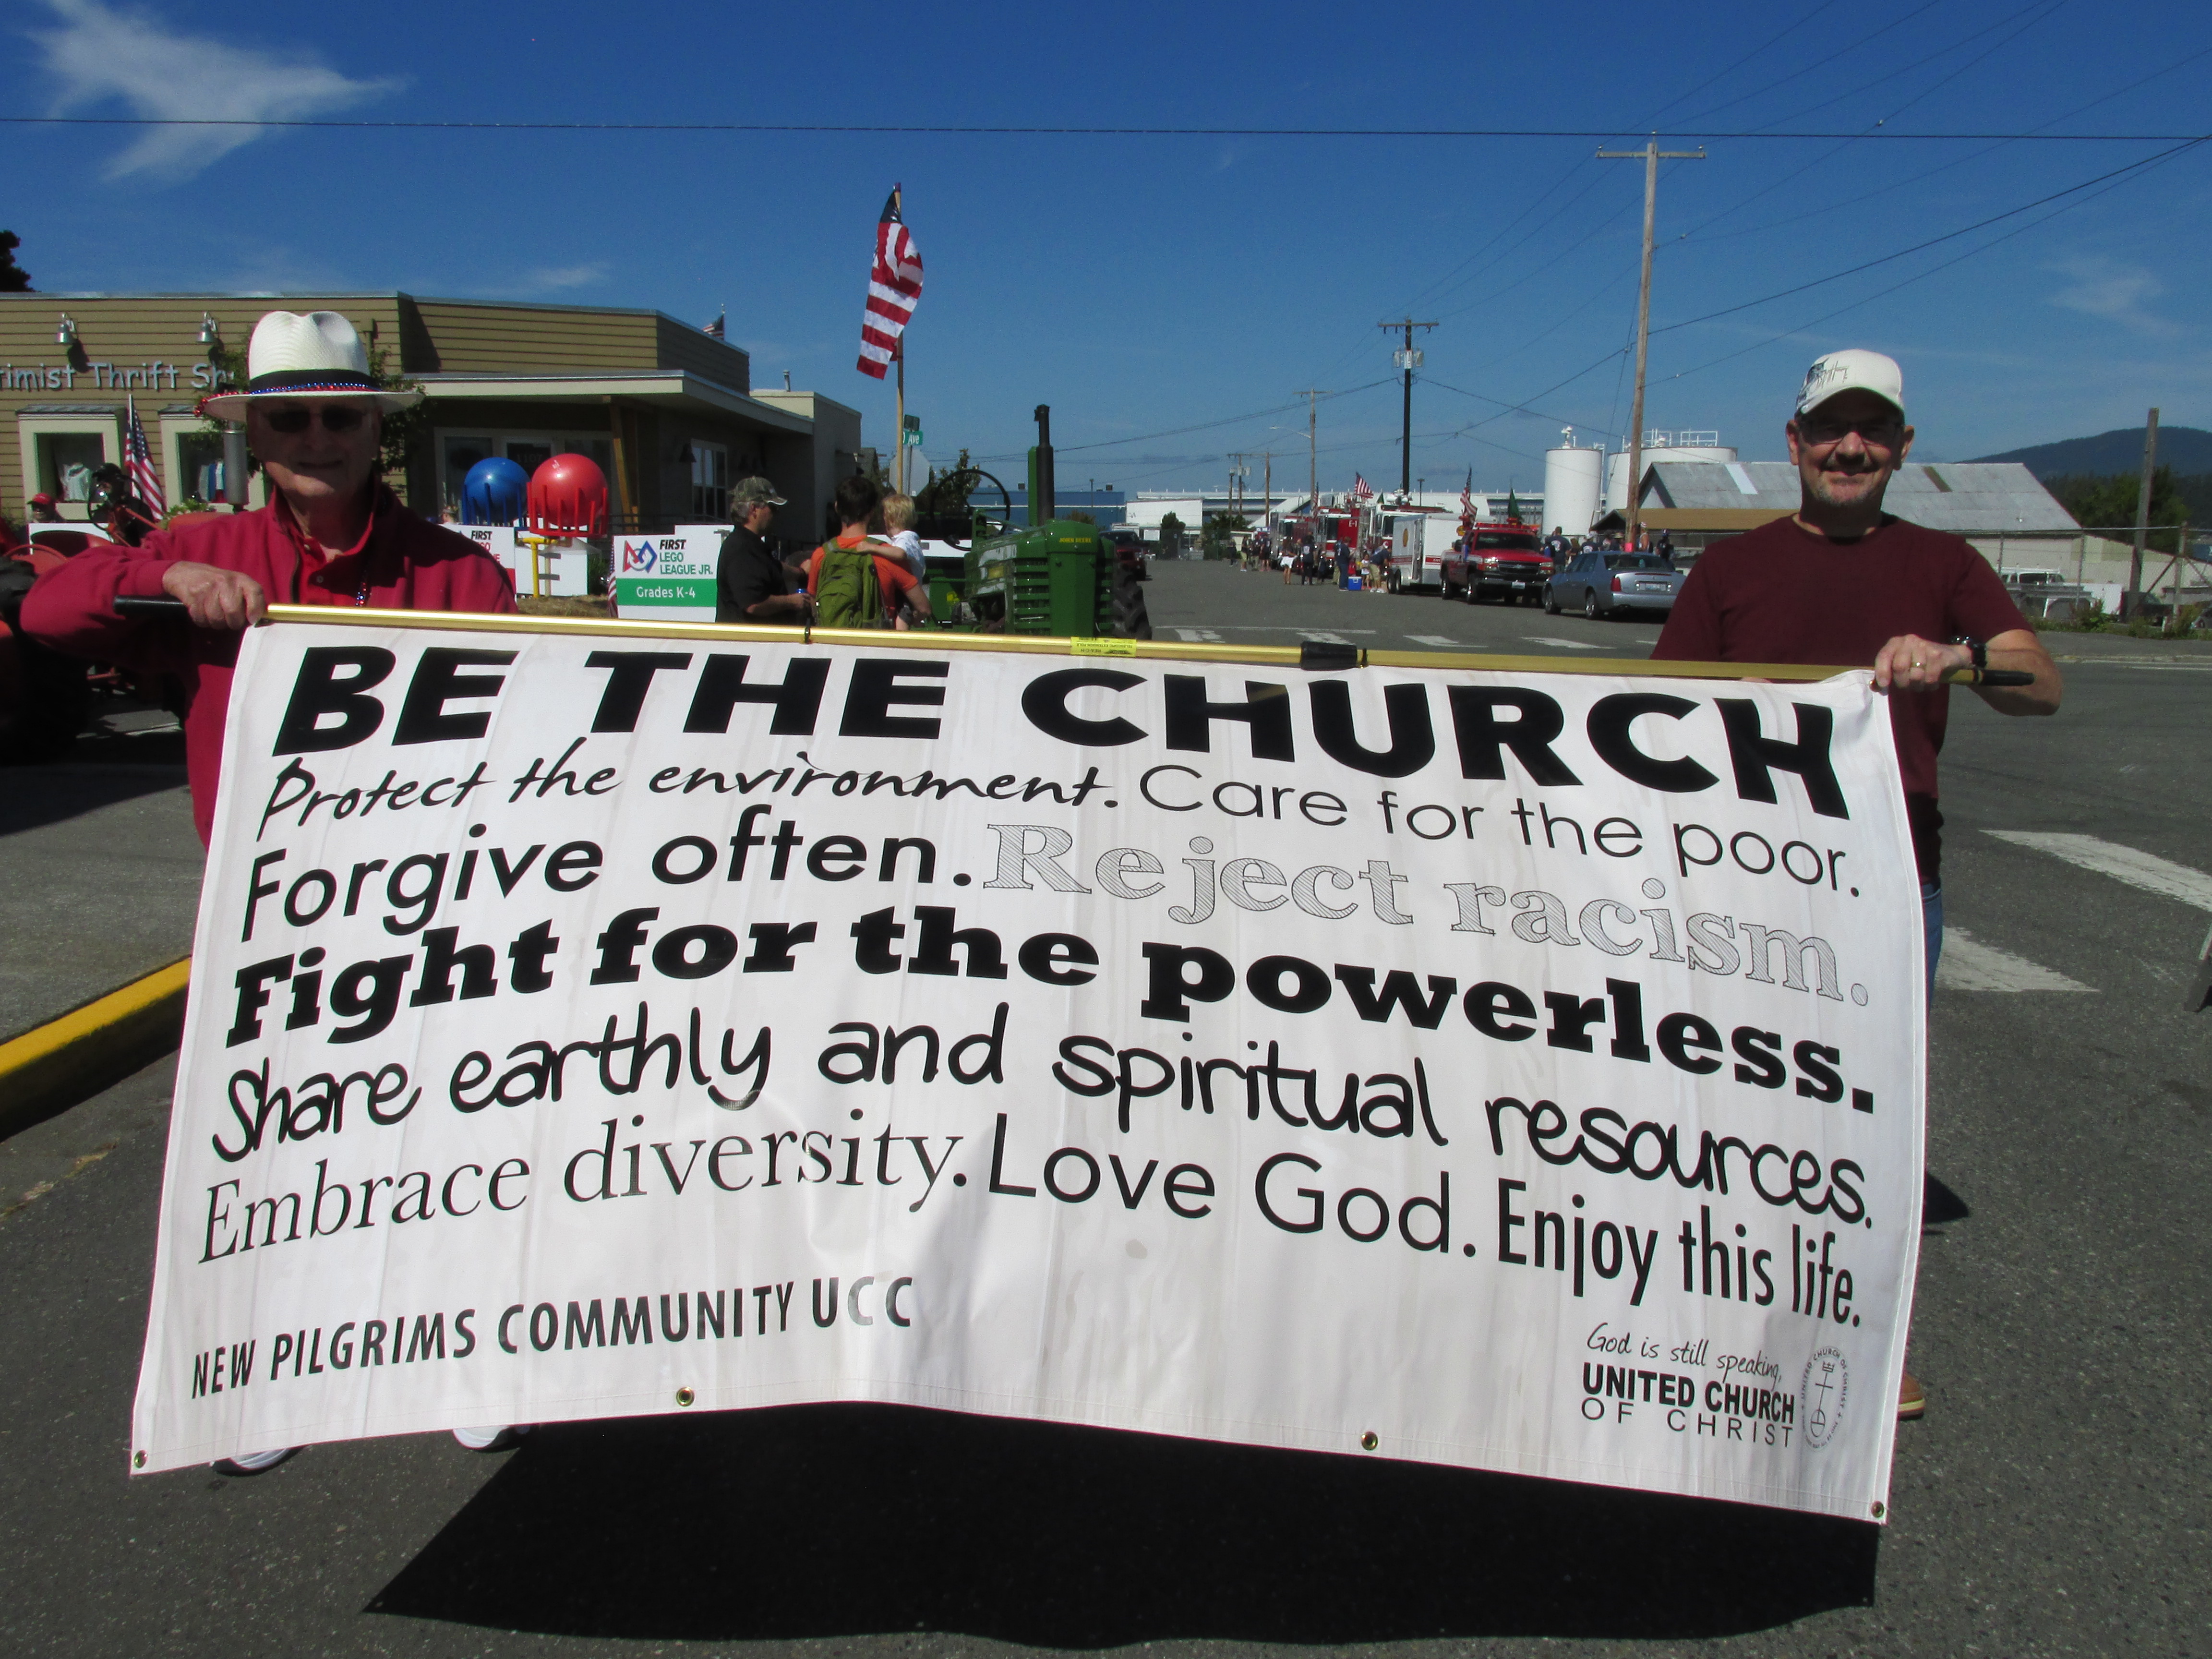 New Pilgrims Community United Church of Christ